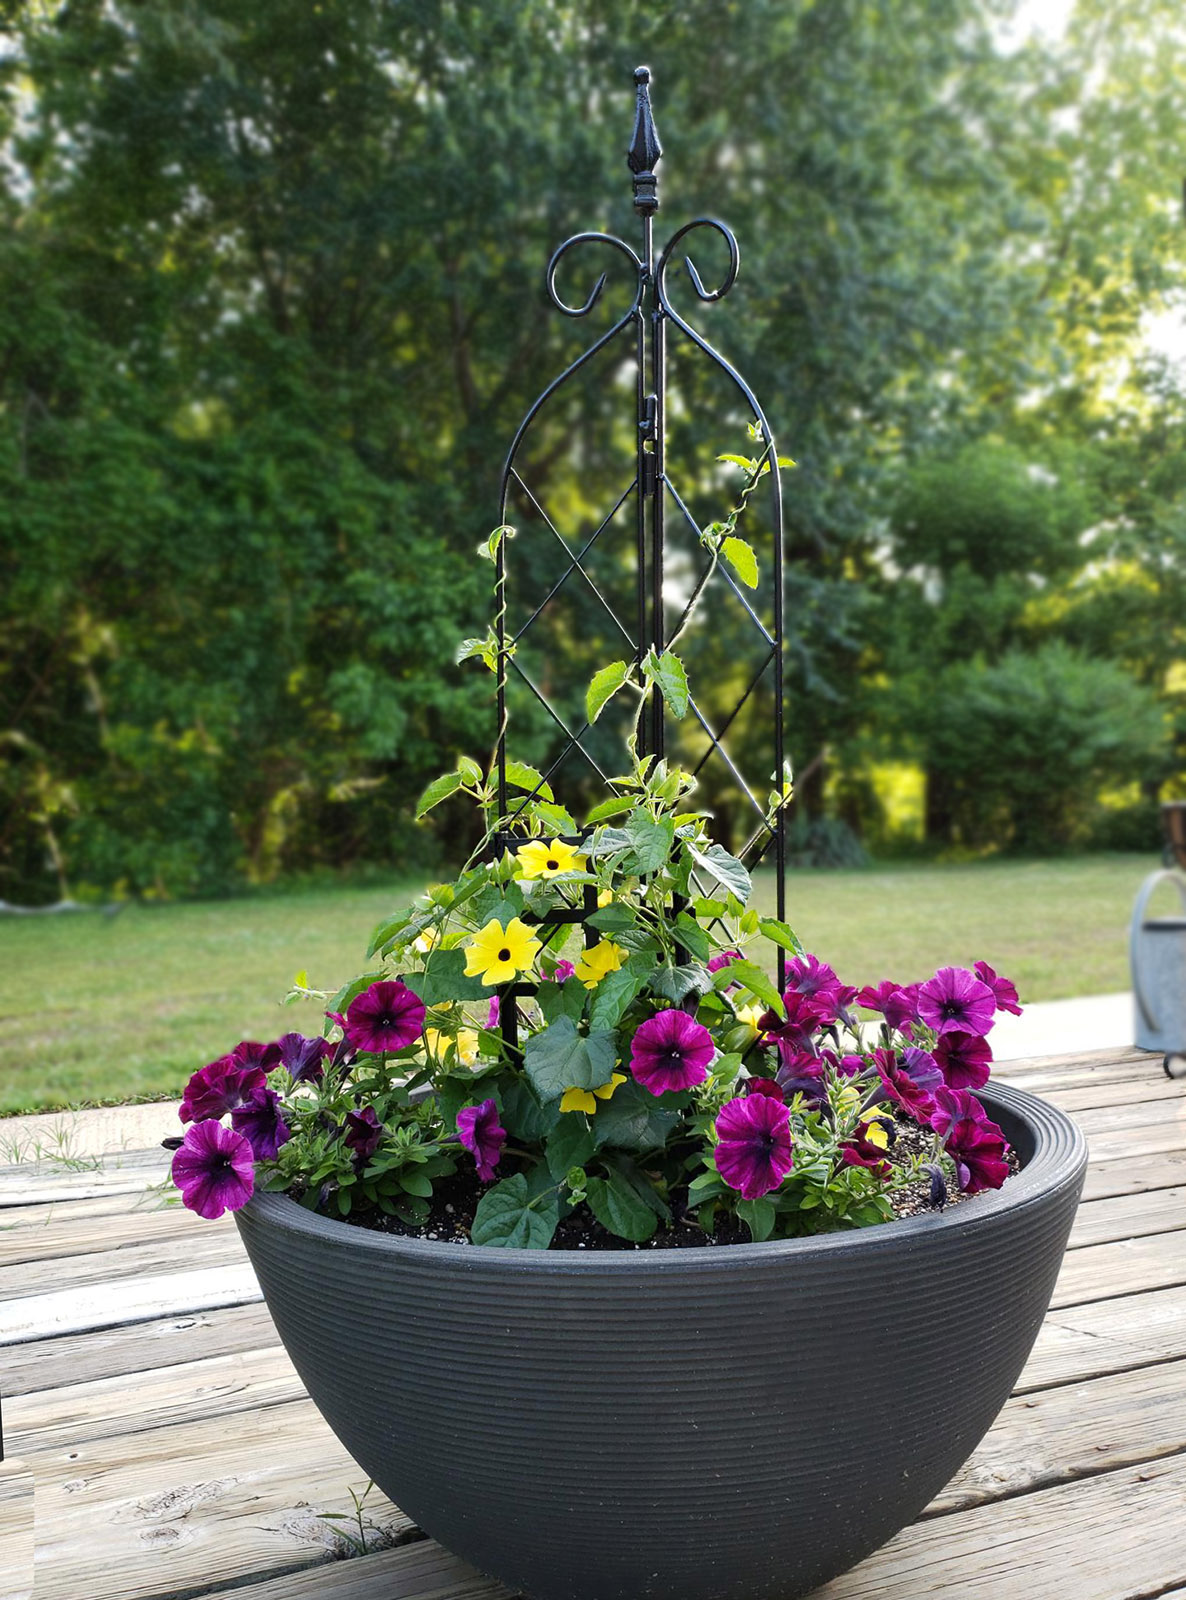 New Plant Trellis Potted Climbing Plants High Quality Garden Houseplants  Flowers | eBay